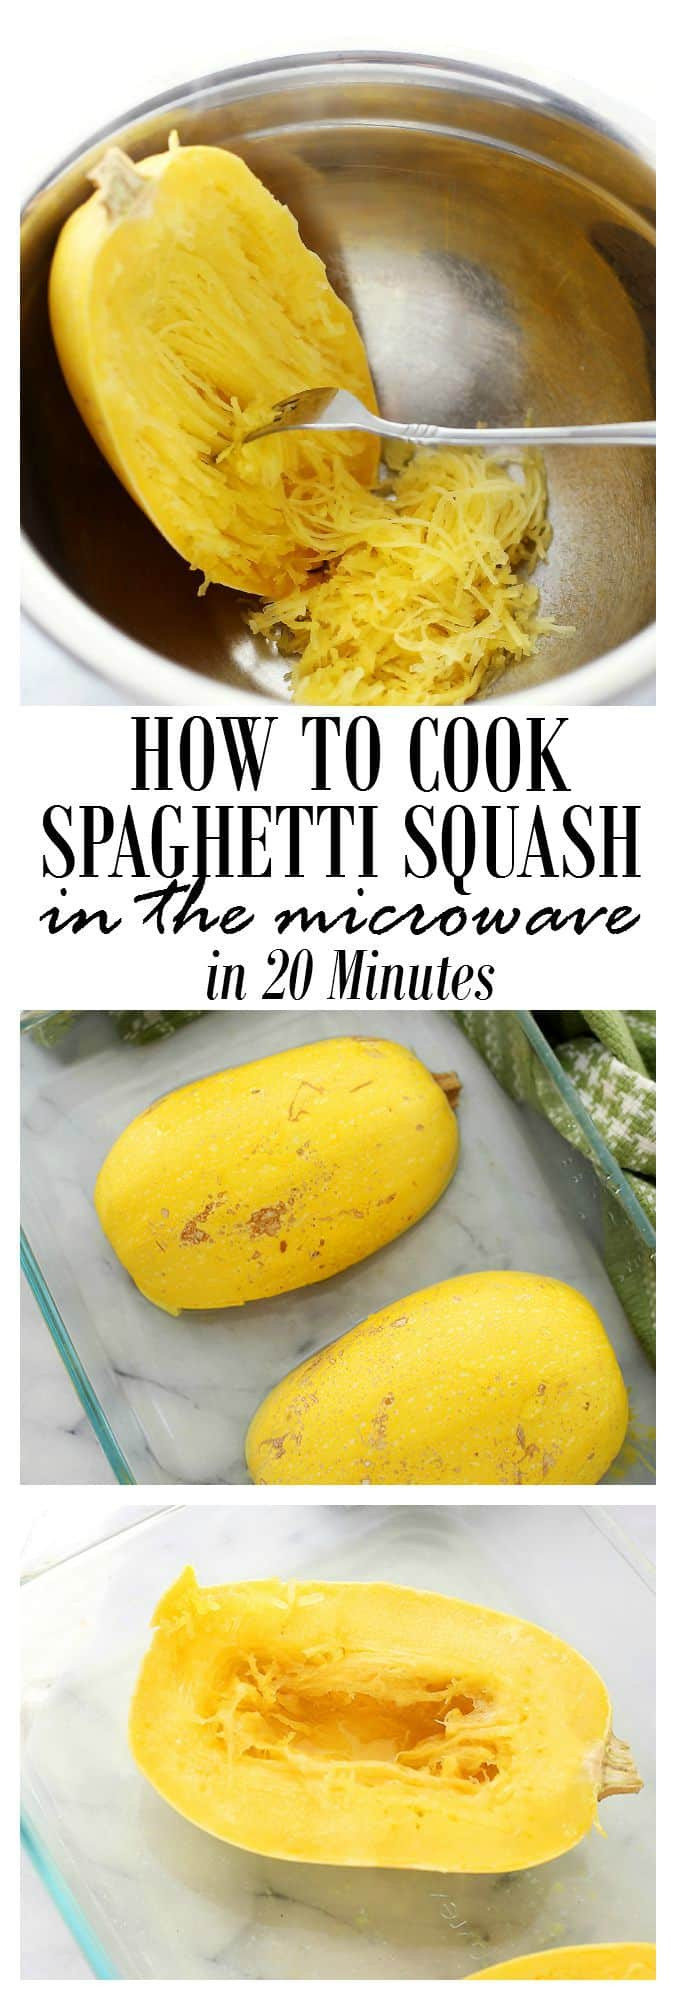 Spaghetti Squash Recipe Microwave
 Mediterranean Spaghetti Squash Boats